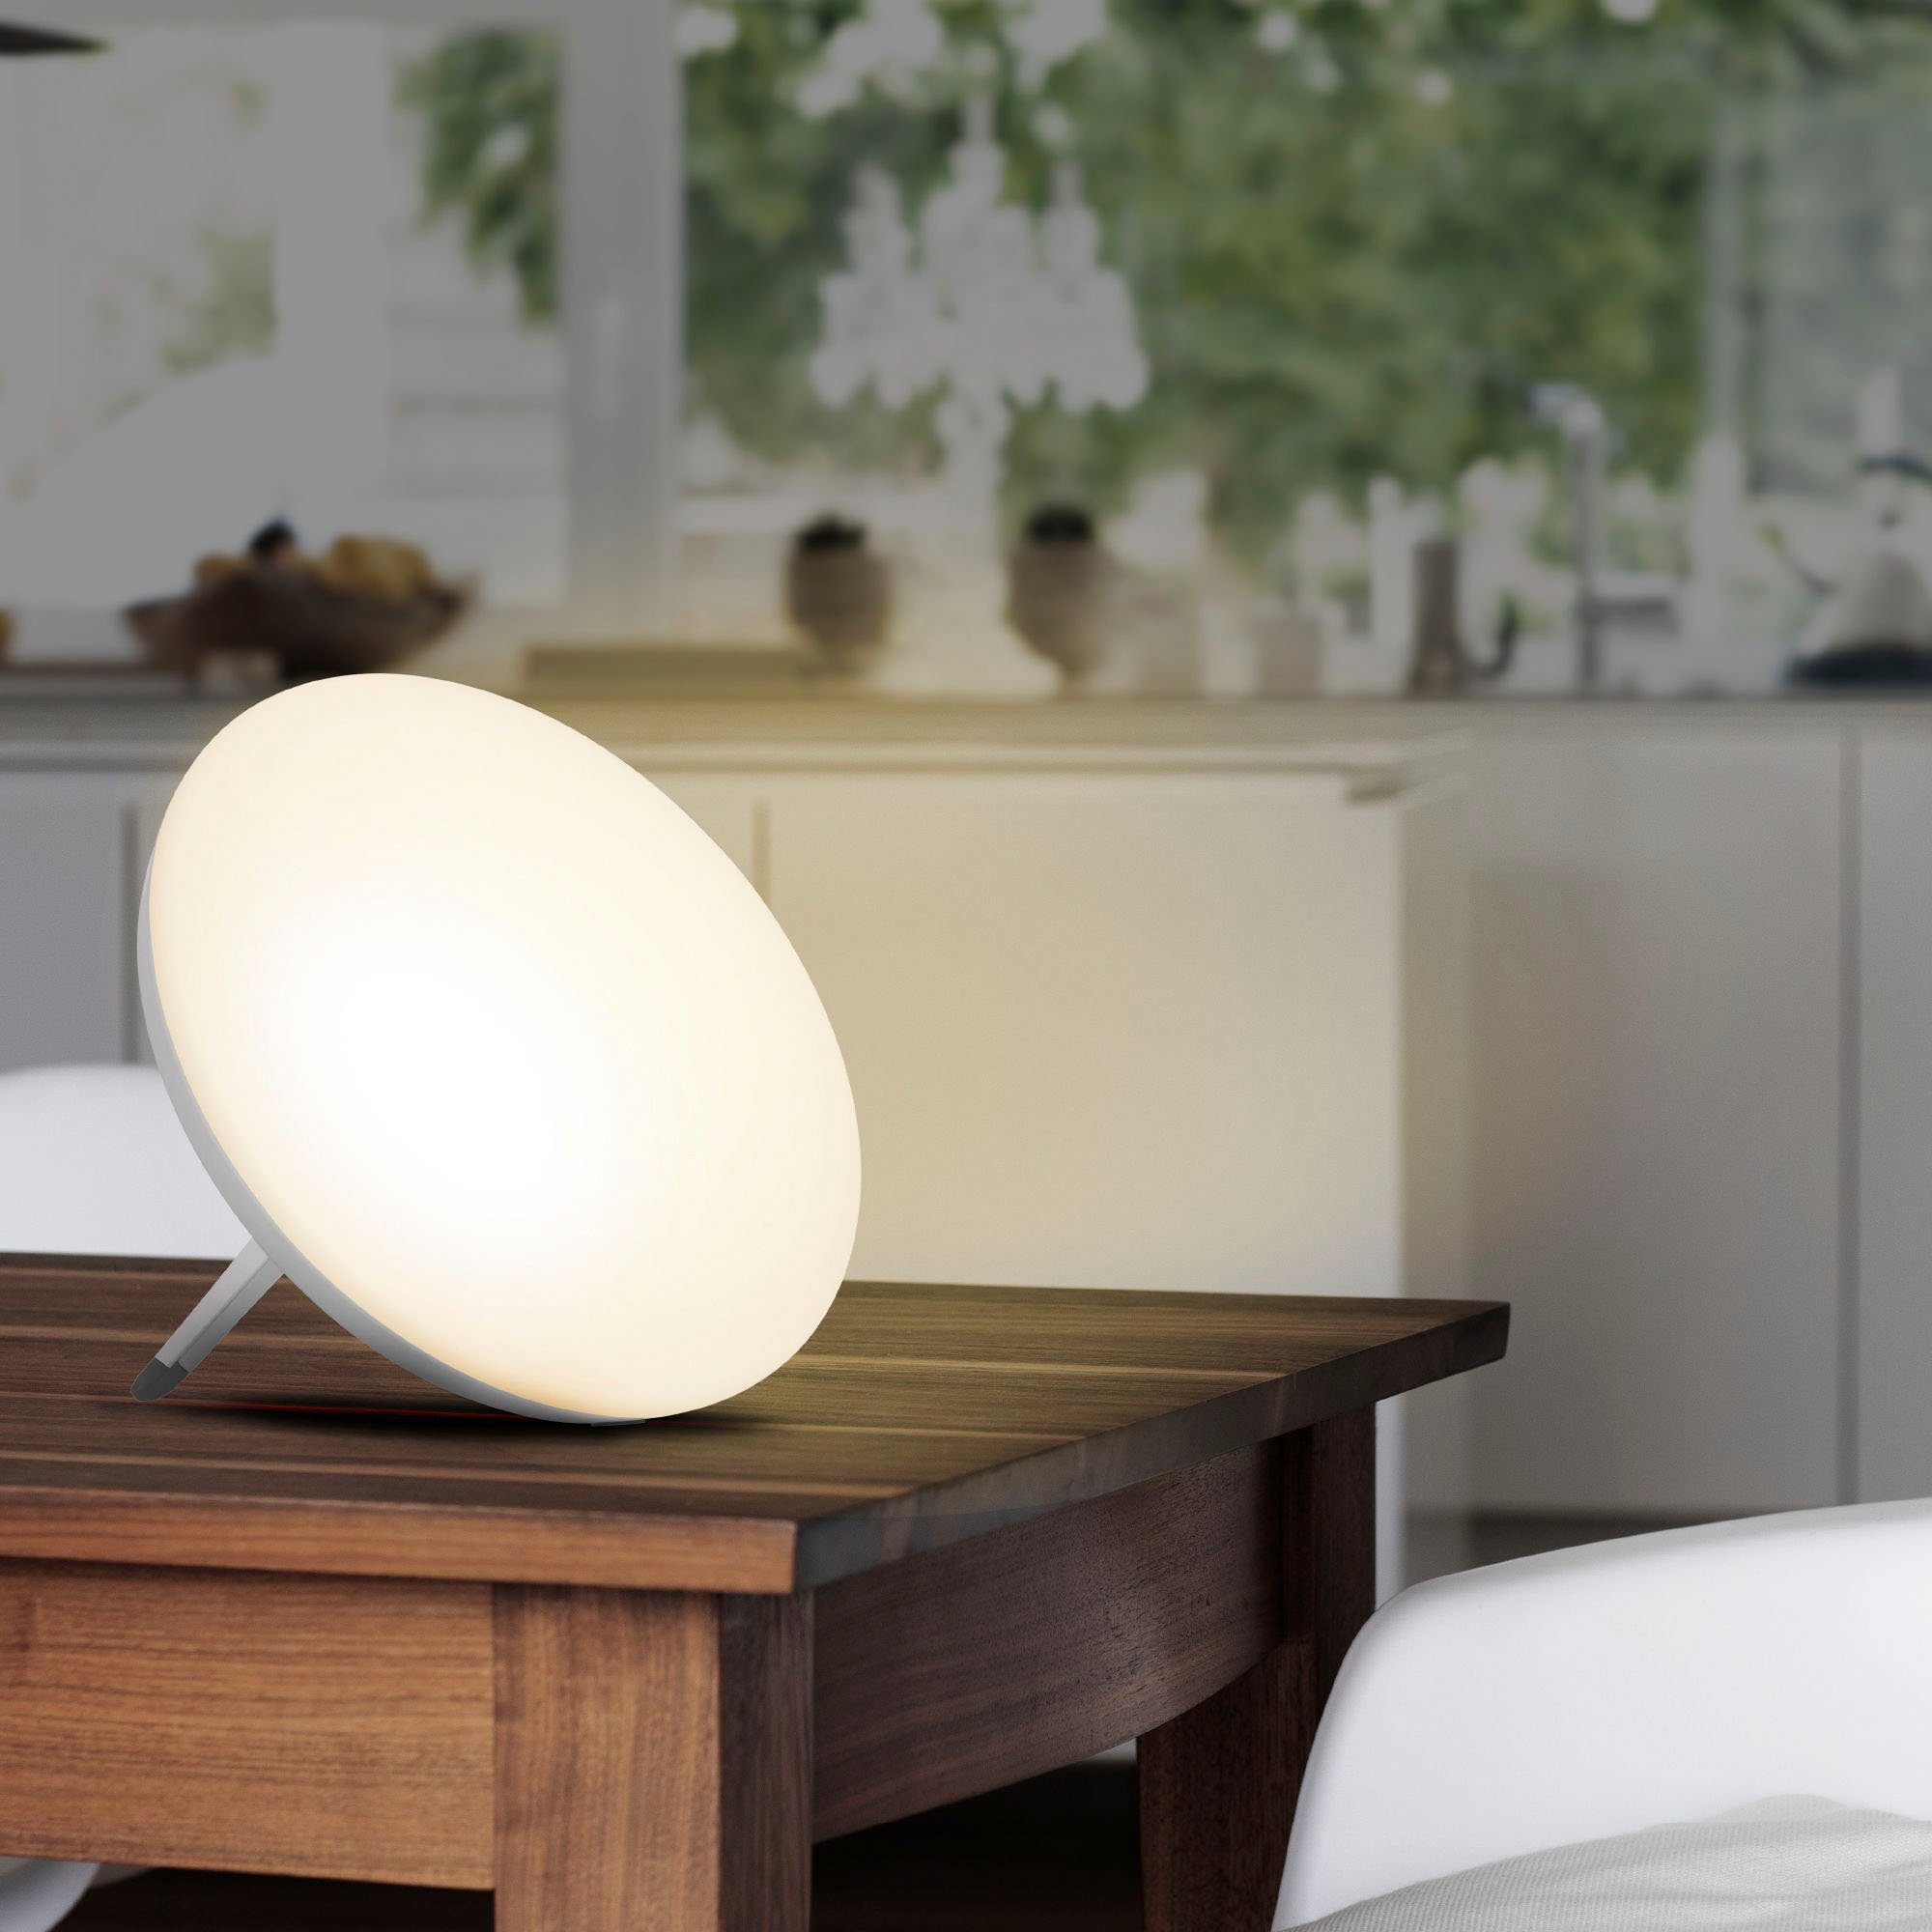 Medisana Tageslichtlampe LT500, Warmweiß integriert, Farbwechsel, fest LED